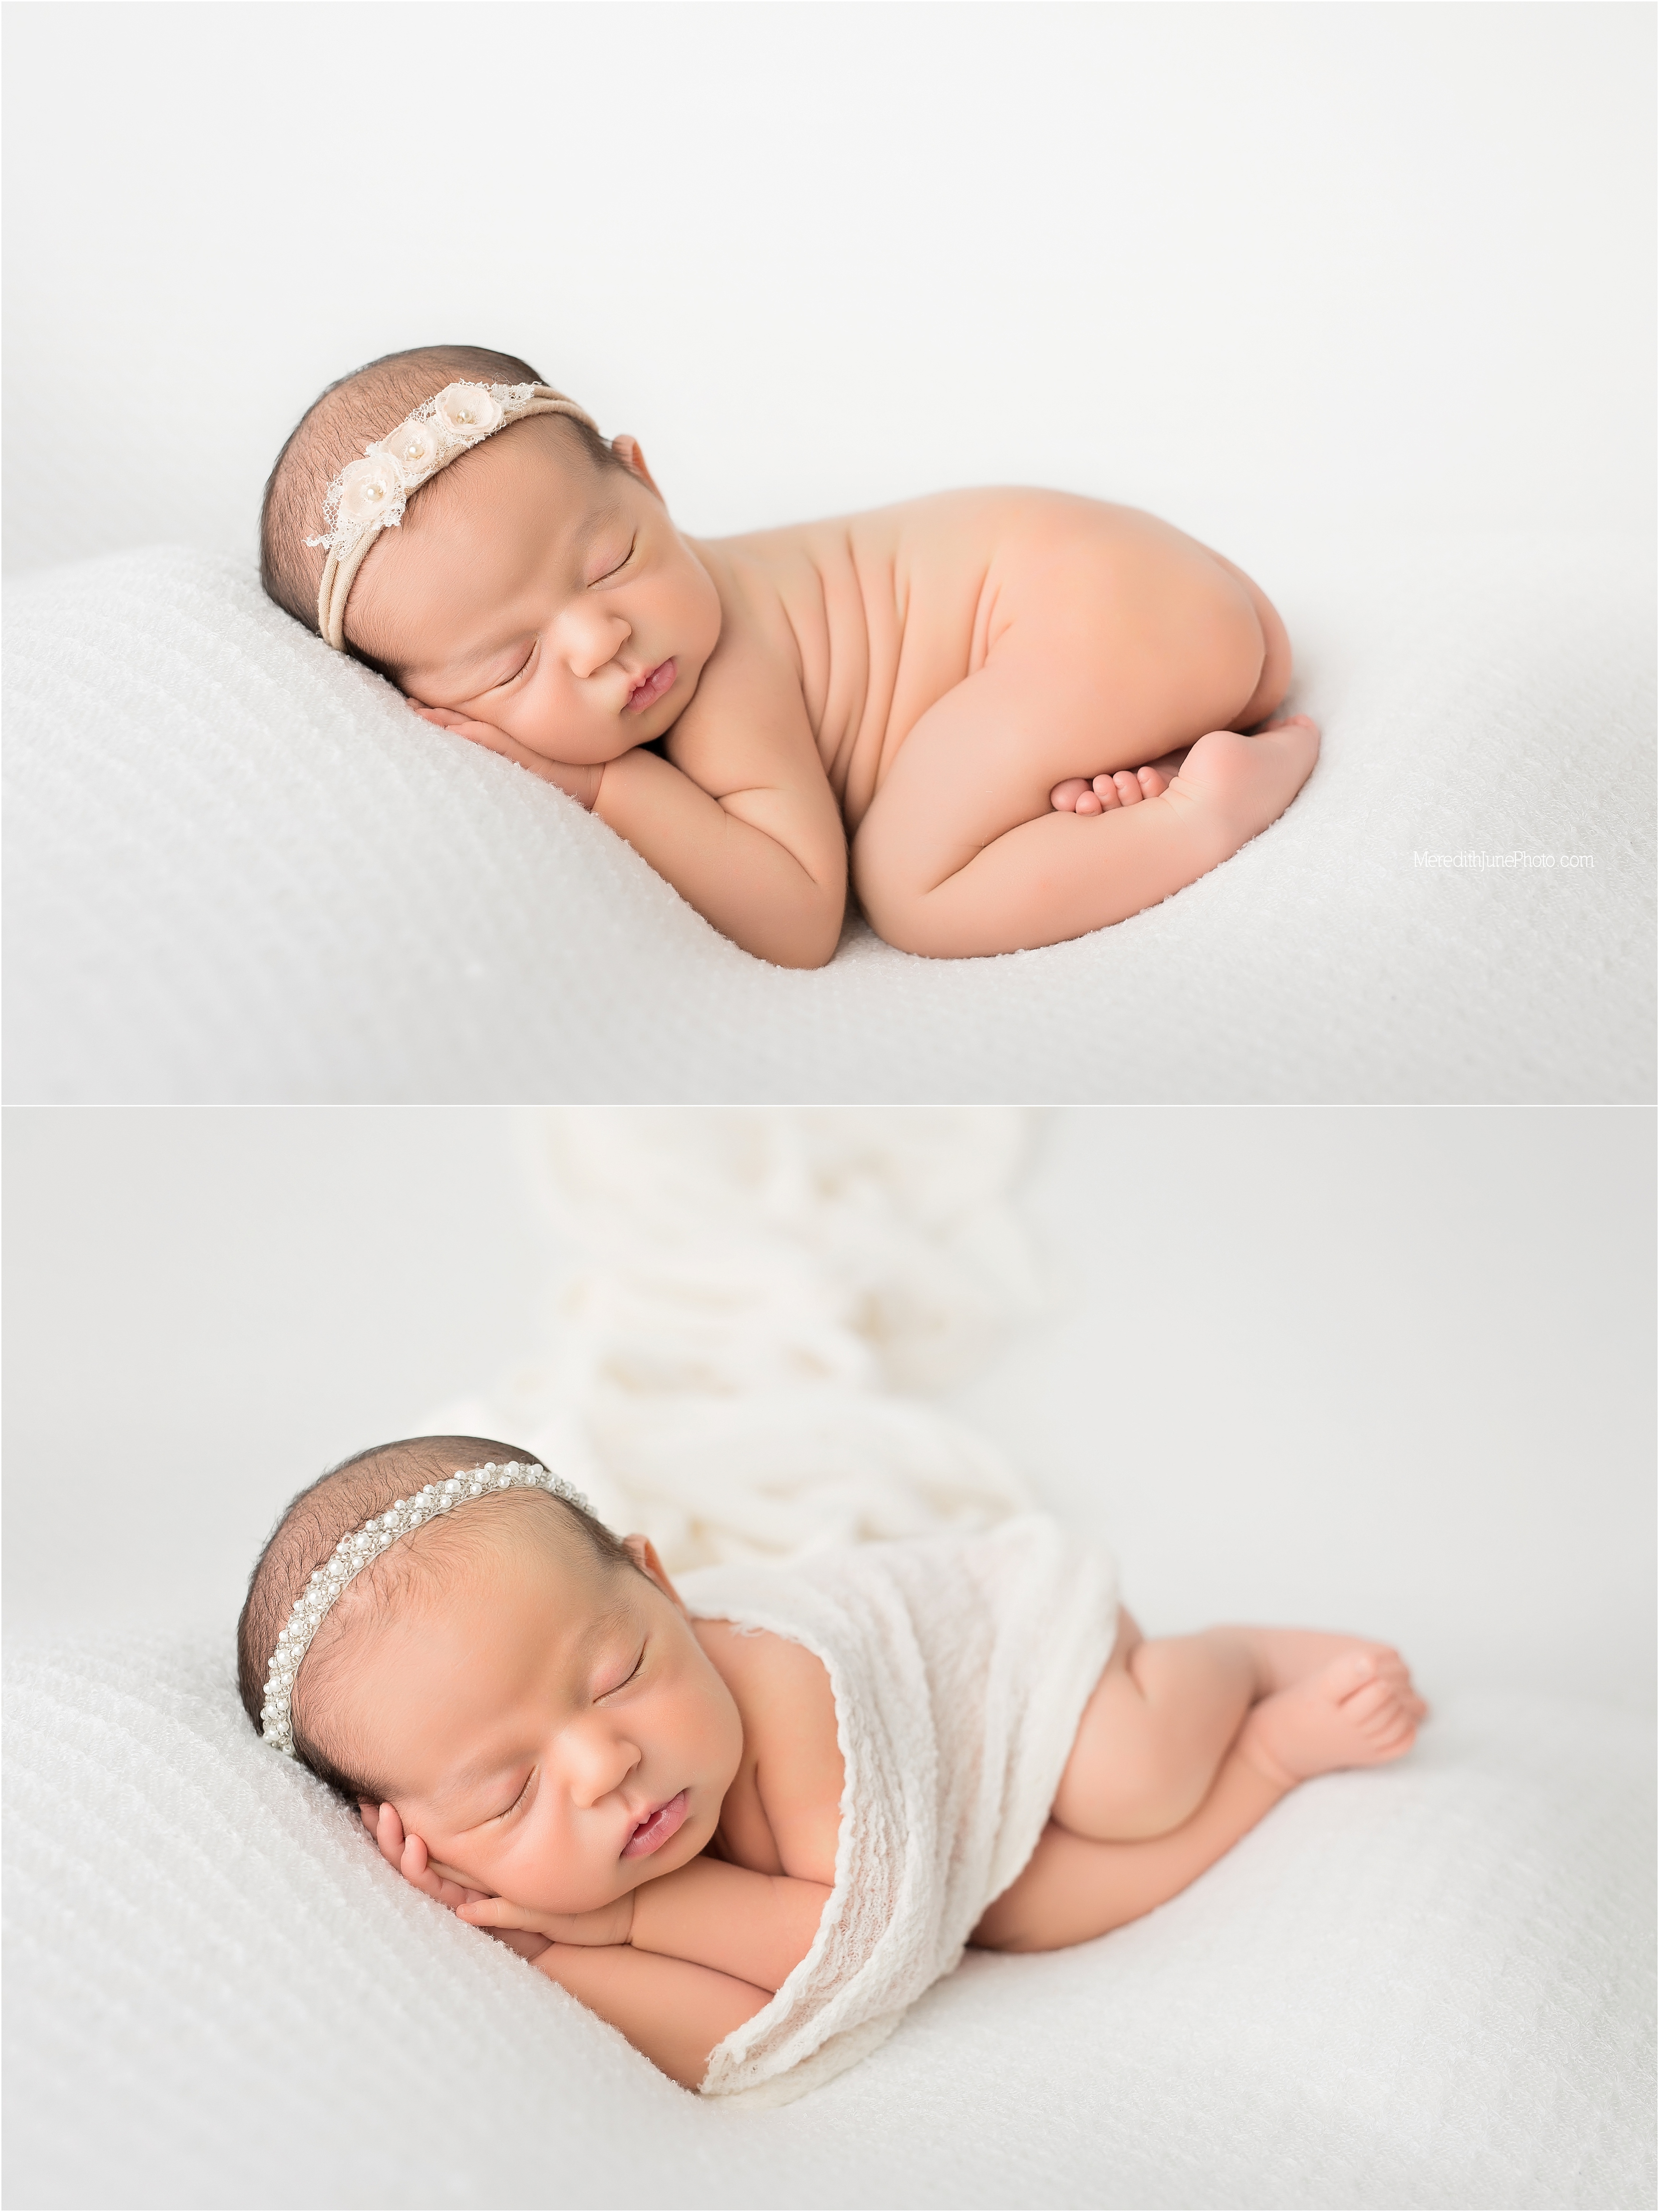 Newborn portraits for baby girl Danielle